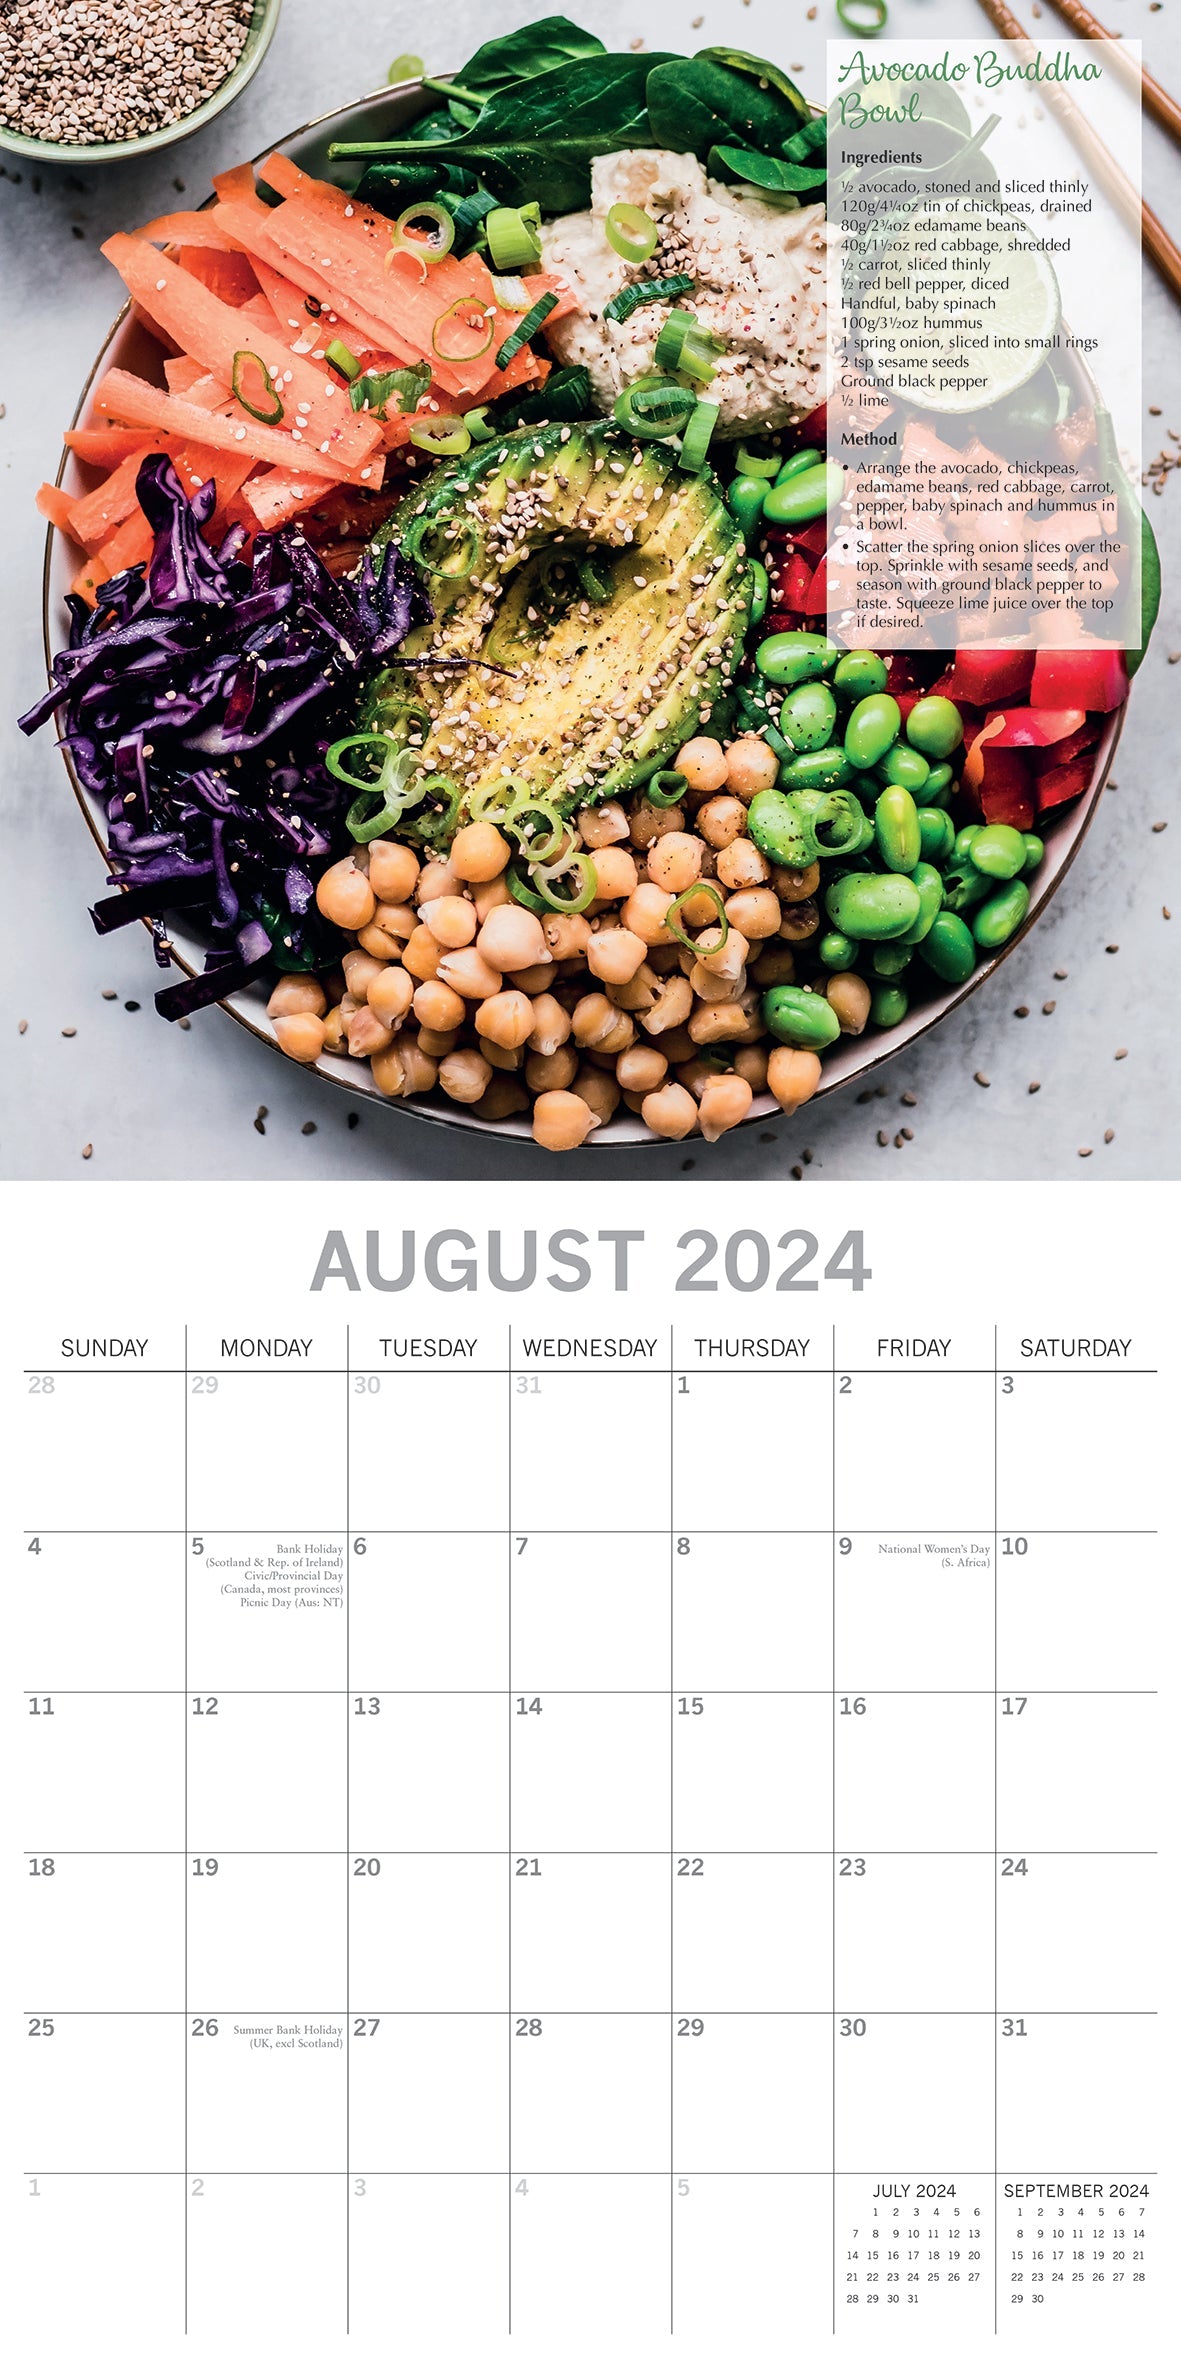 2024 Tasty Vegan Recipes - Square Wall Calendar